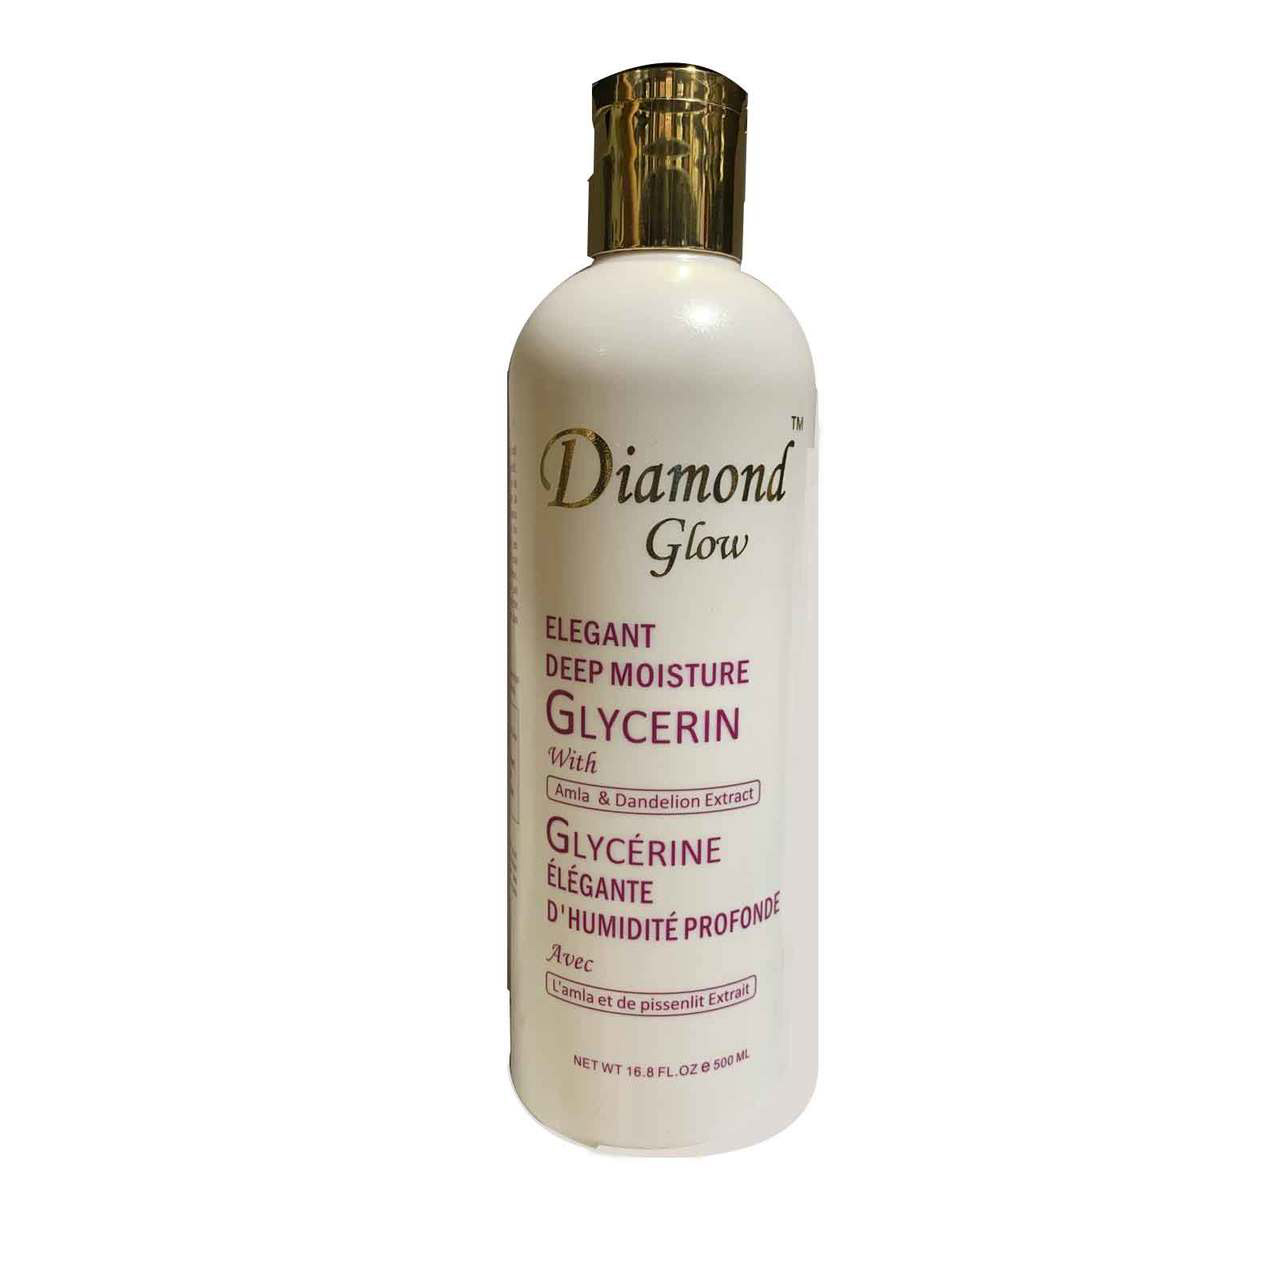 DIAMOND GLOW ® Elegant Deep Moisture GLYCERIN. 